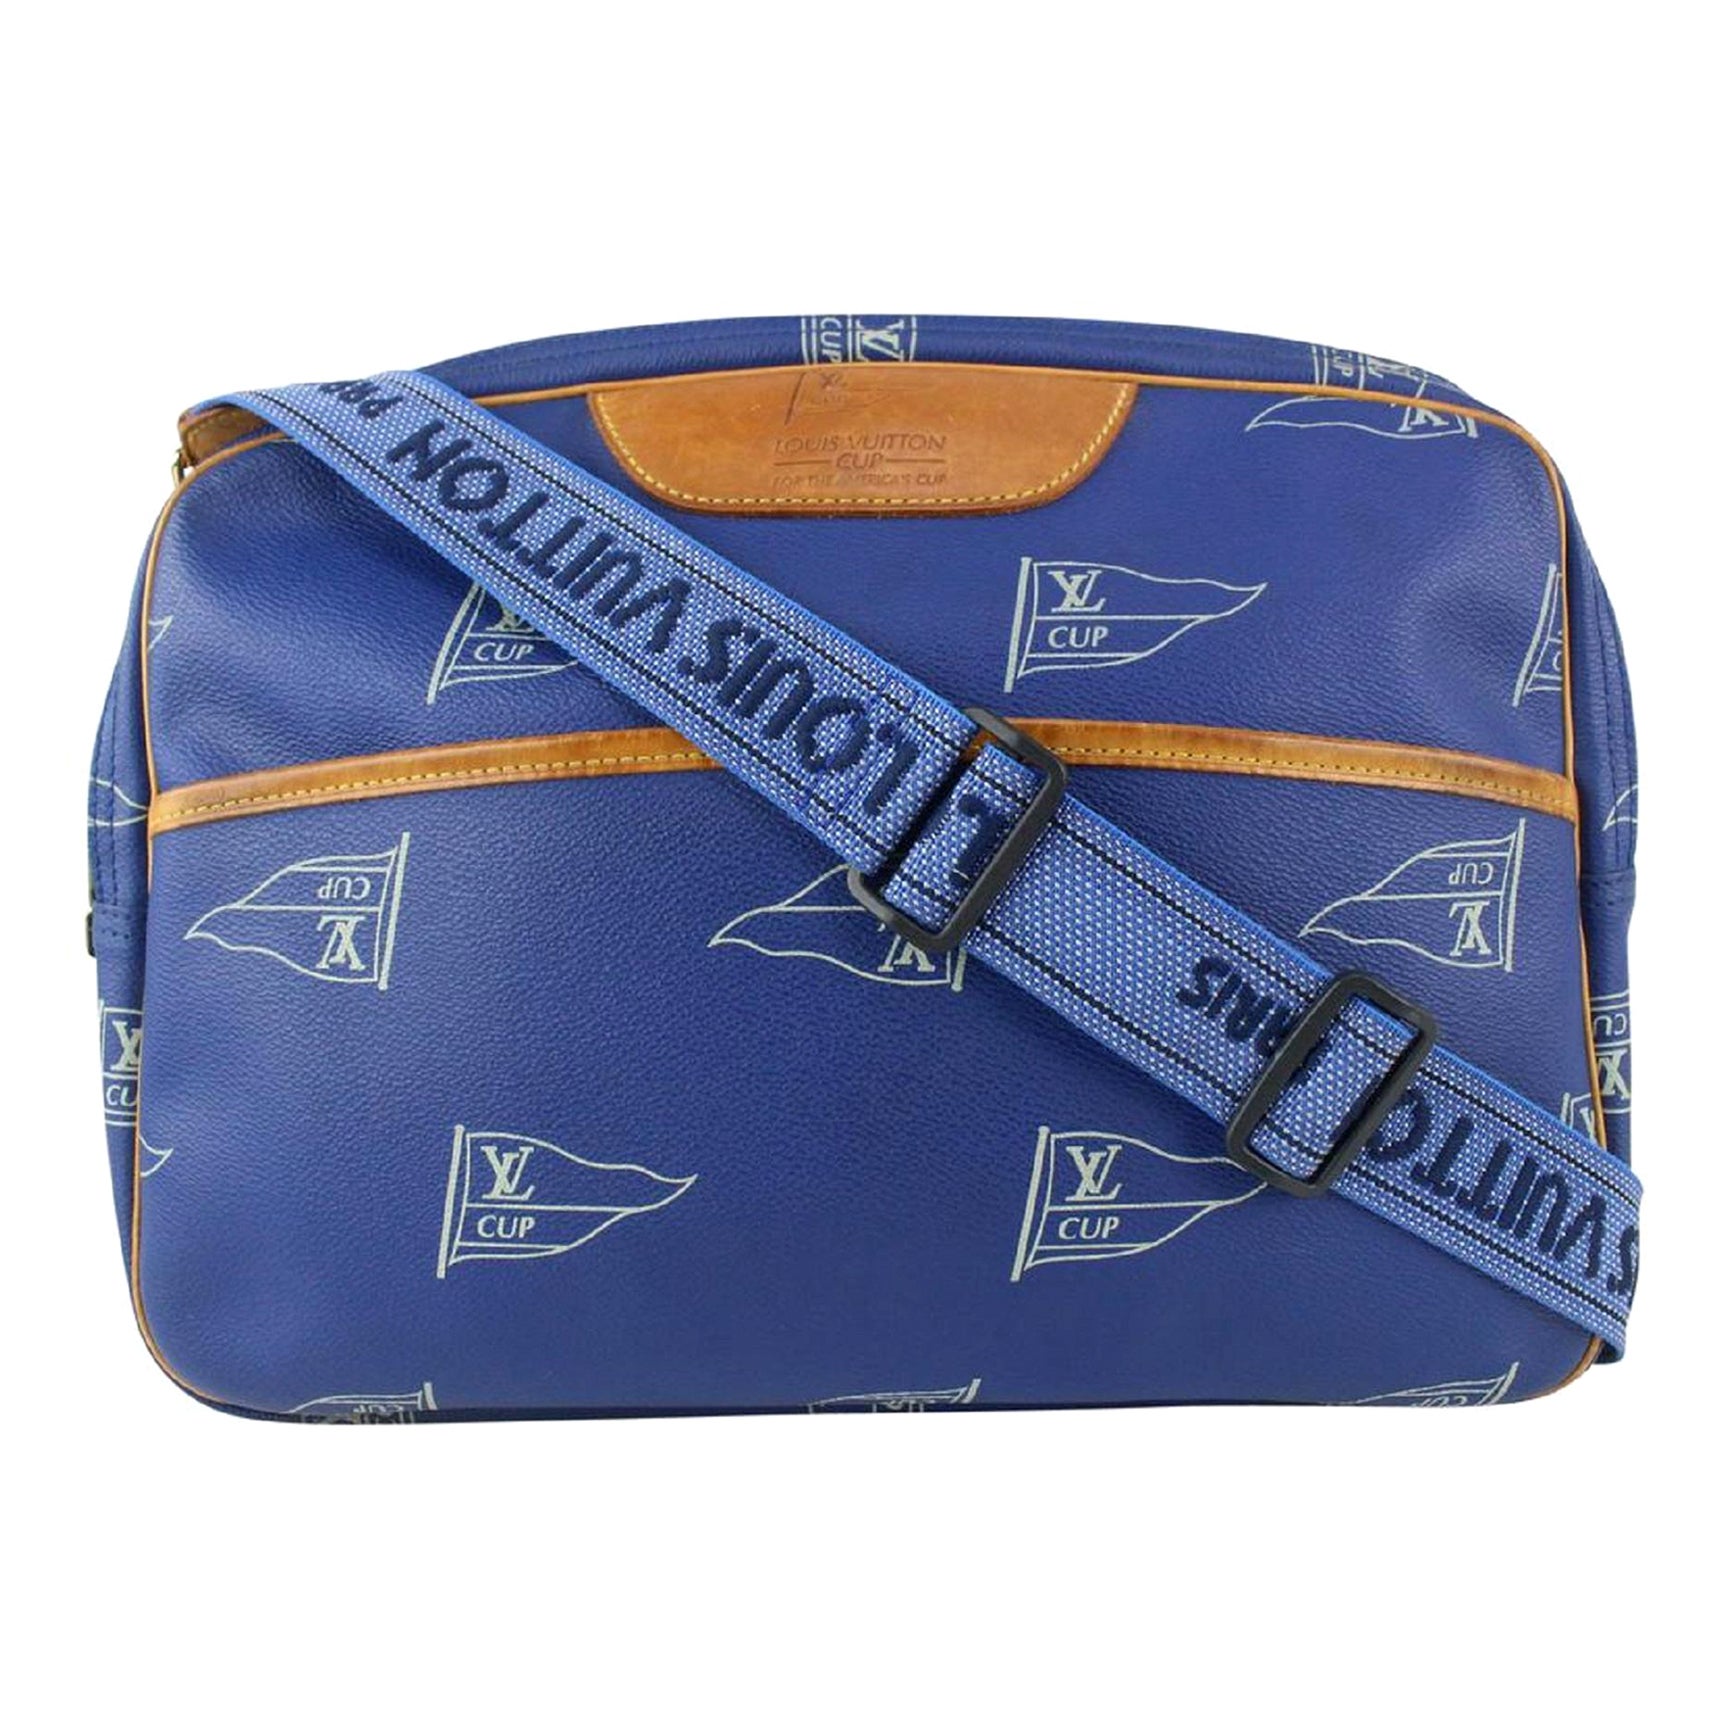 Louis Vuitton 1991 LV Cup Blue Monogram Sail Sac Cowes Messenger Bag 826lv89  